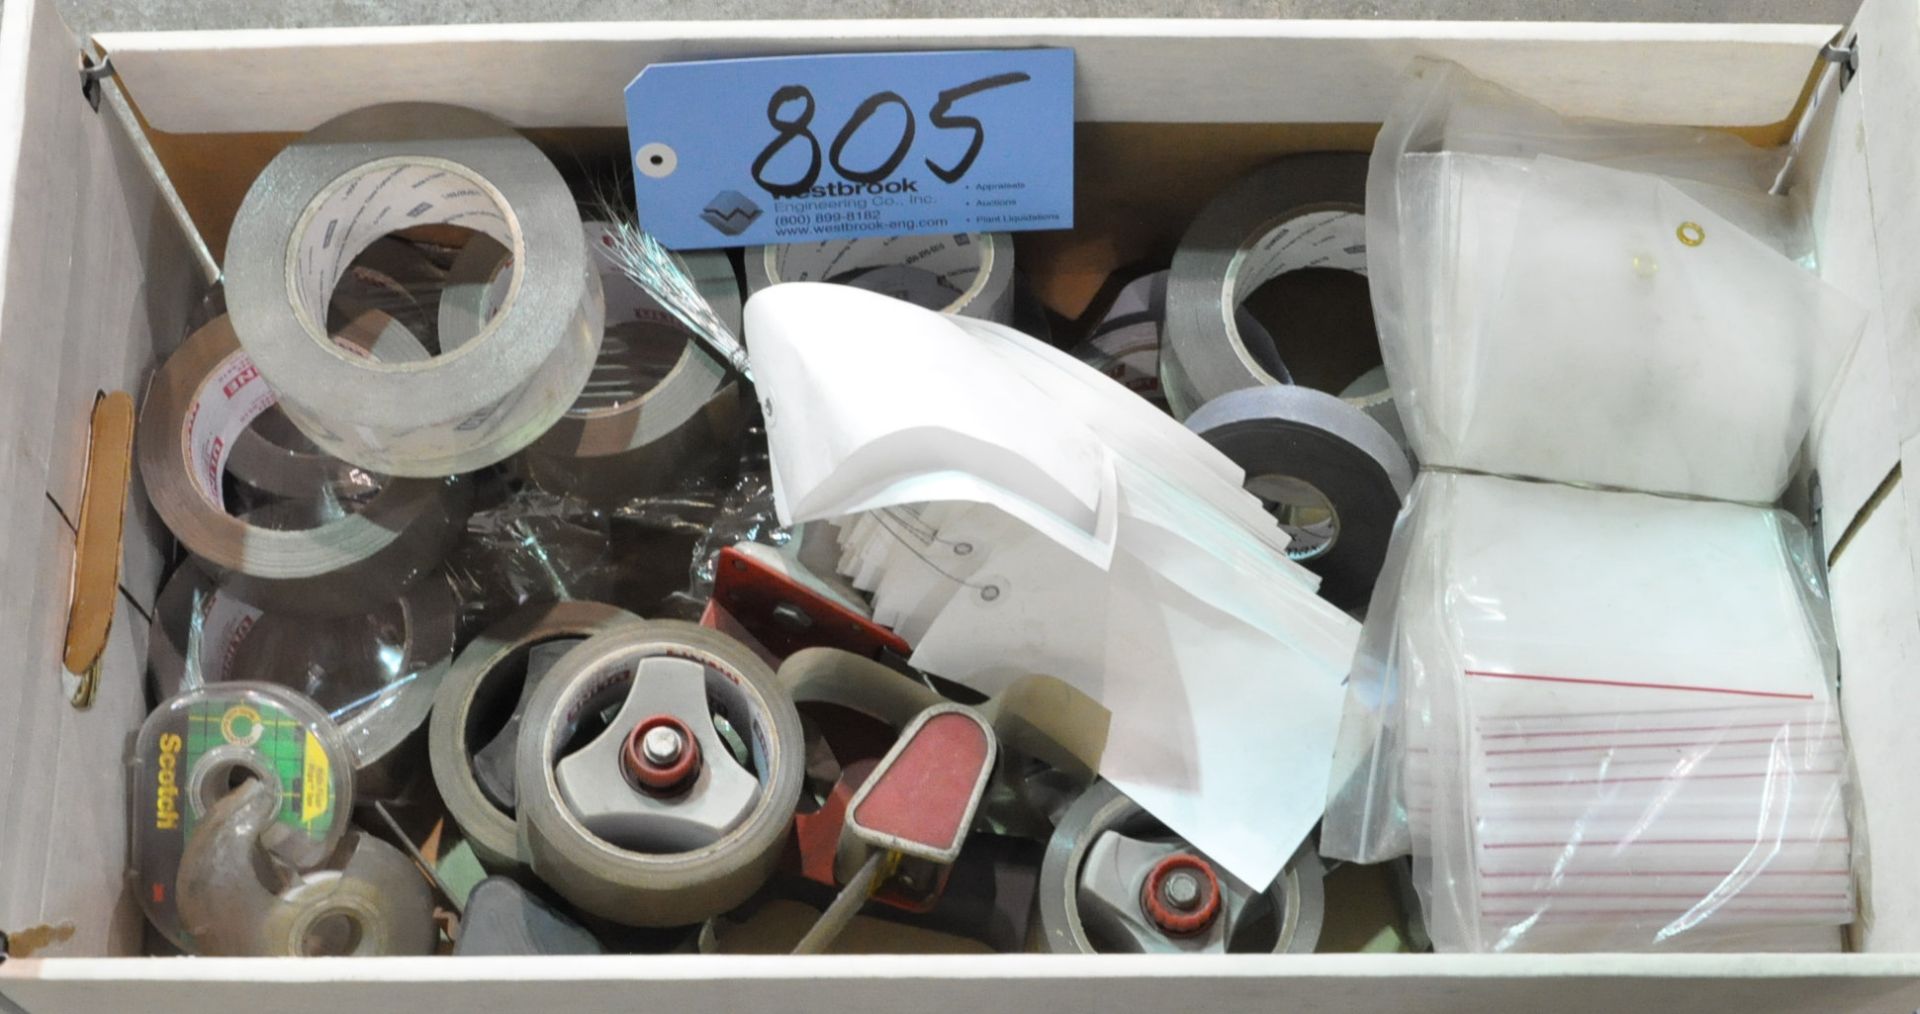 Lot-Tape, Tape Gun and Recloseable Bags in (1) Box